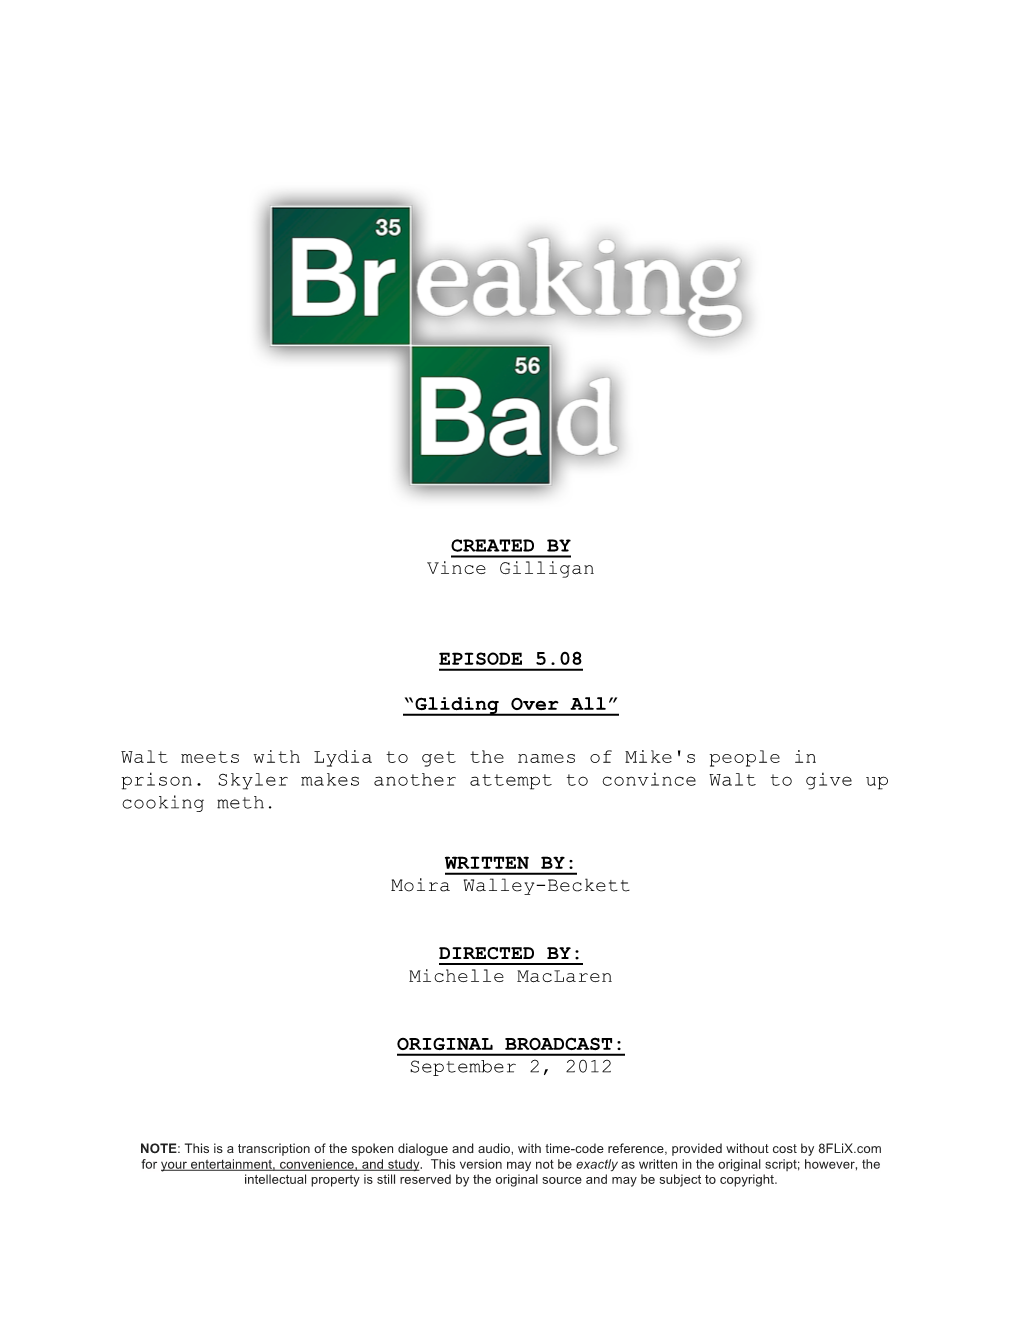 Breaking Bad | Dialogue Transcript | S5:E8